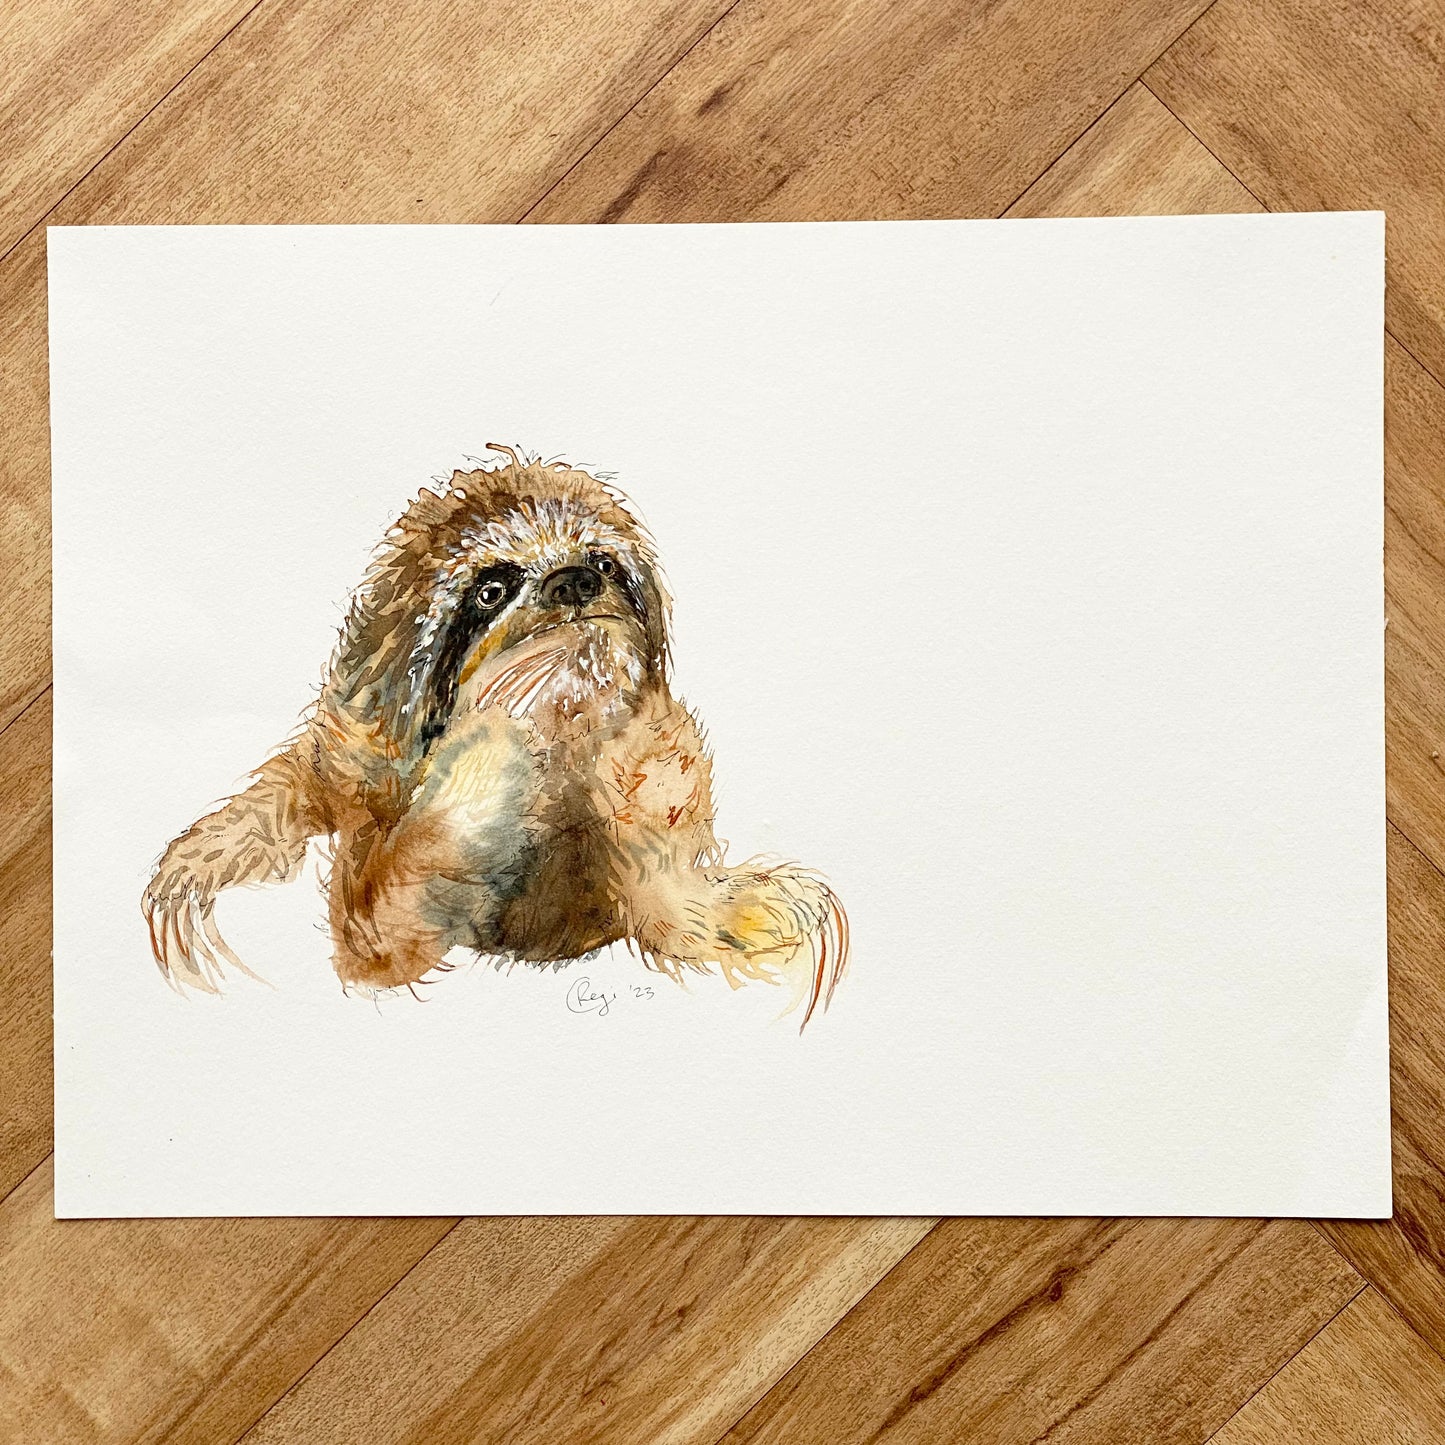 Original sketches and drafts - Sloth